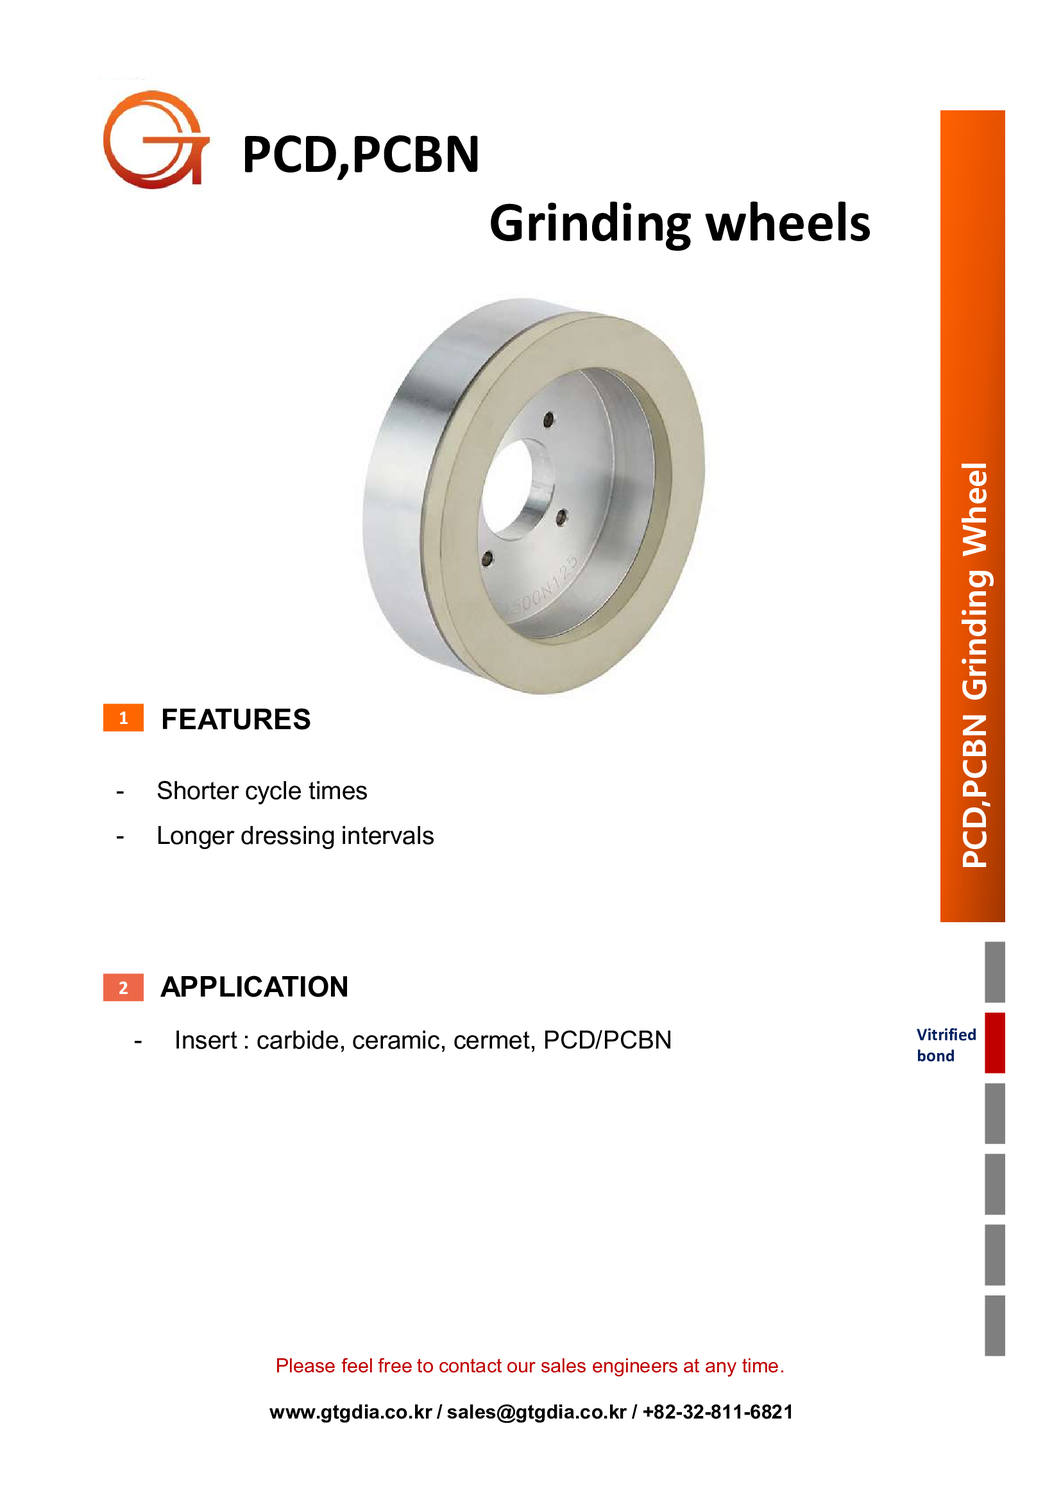 PCD,PCBN Grinding Wheel